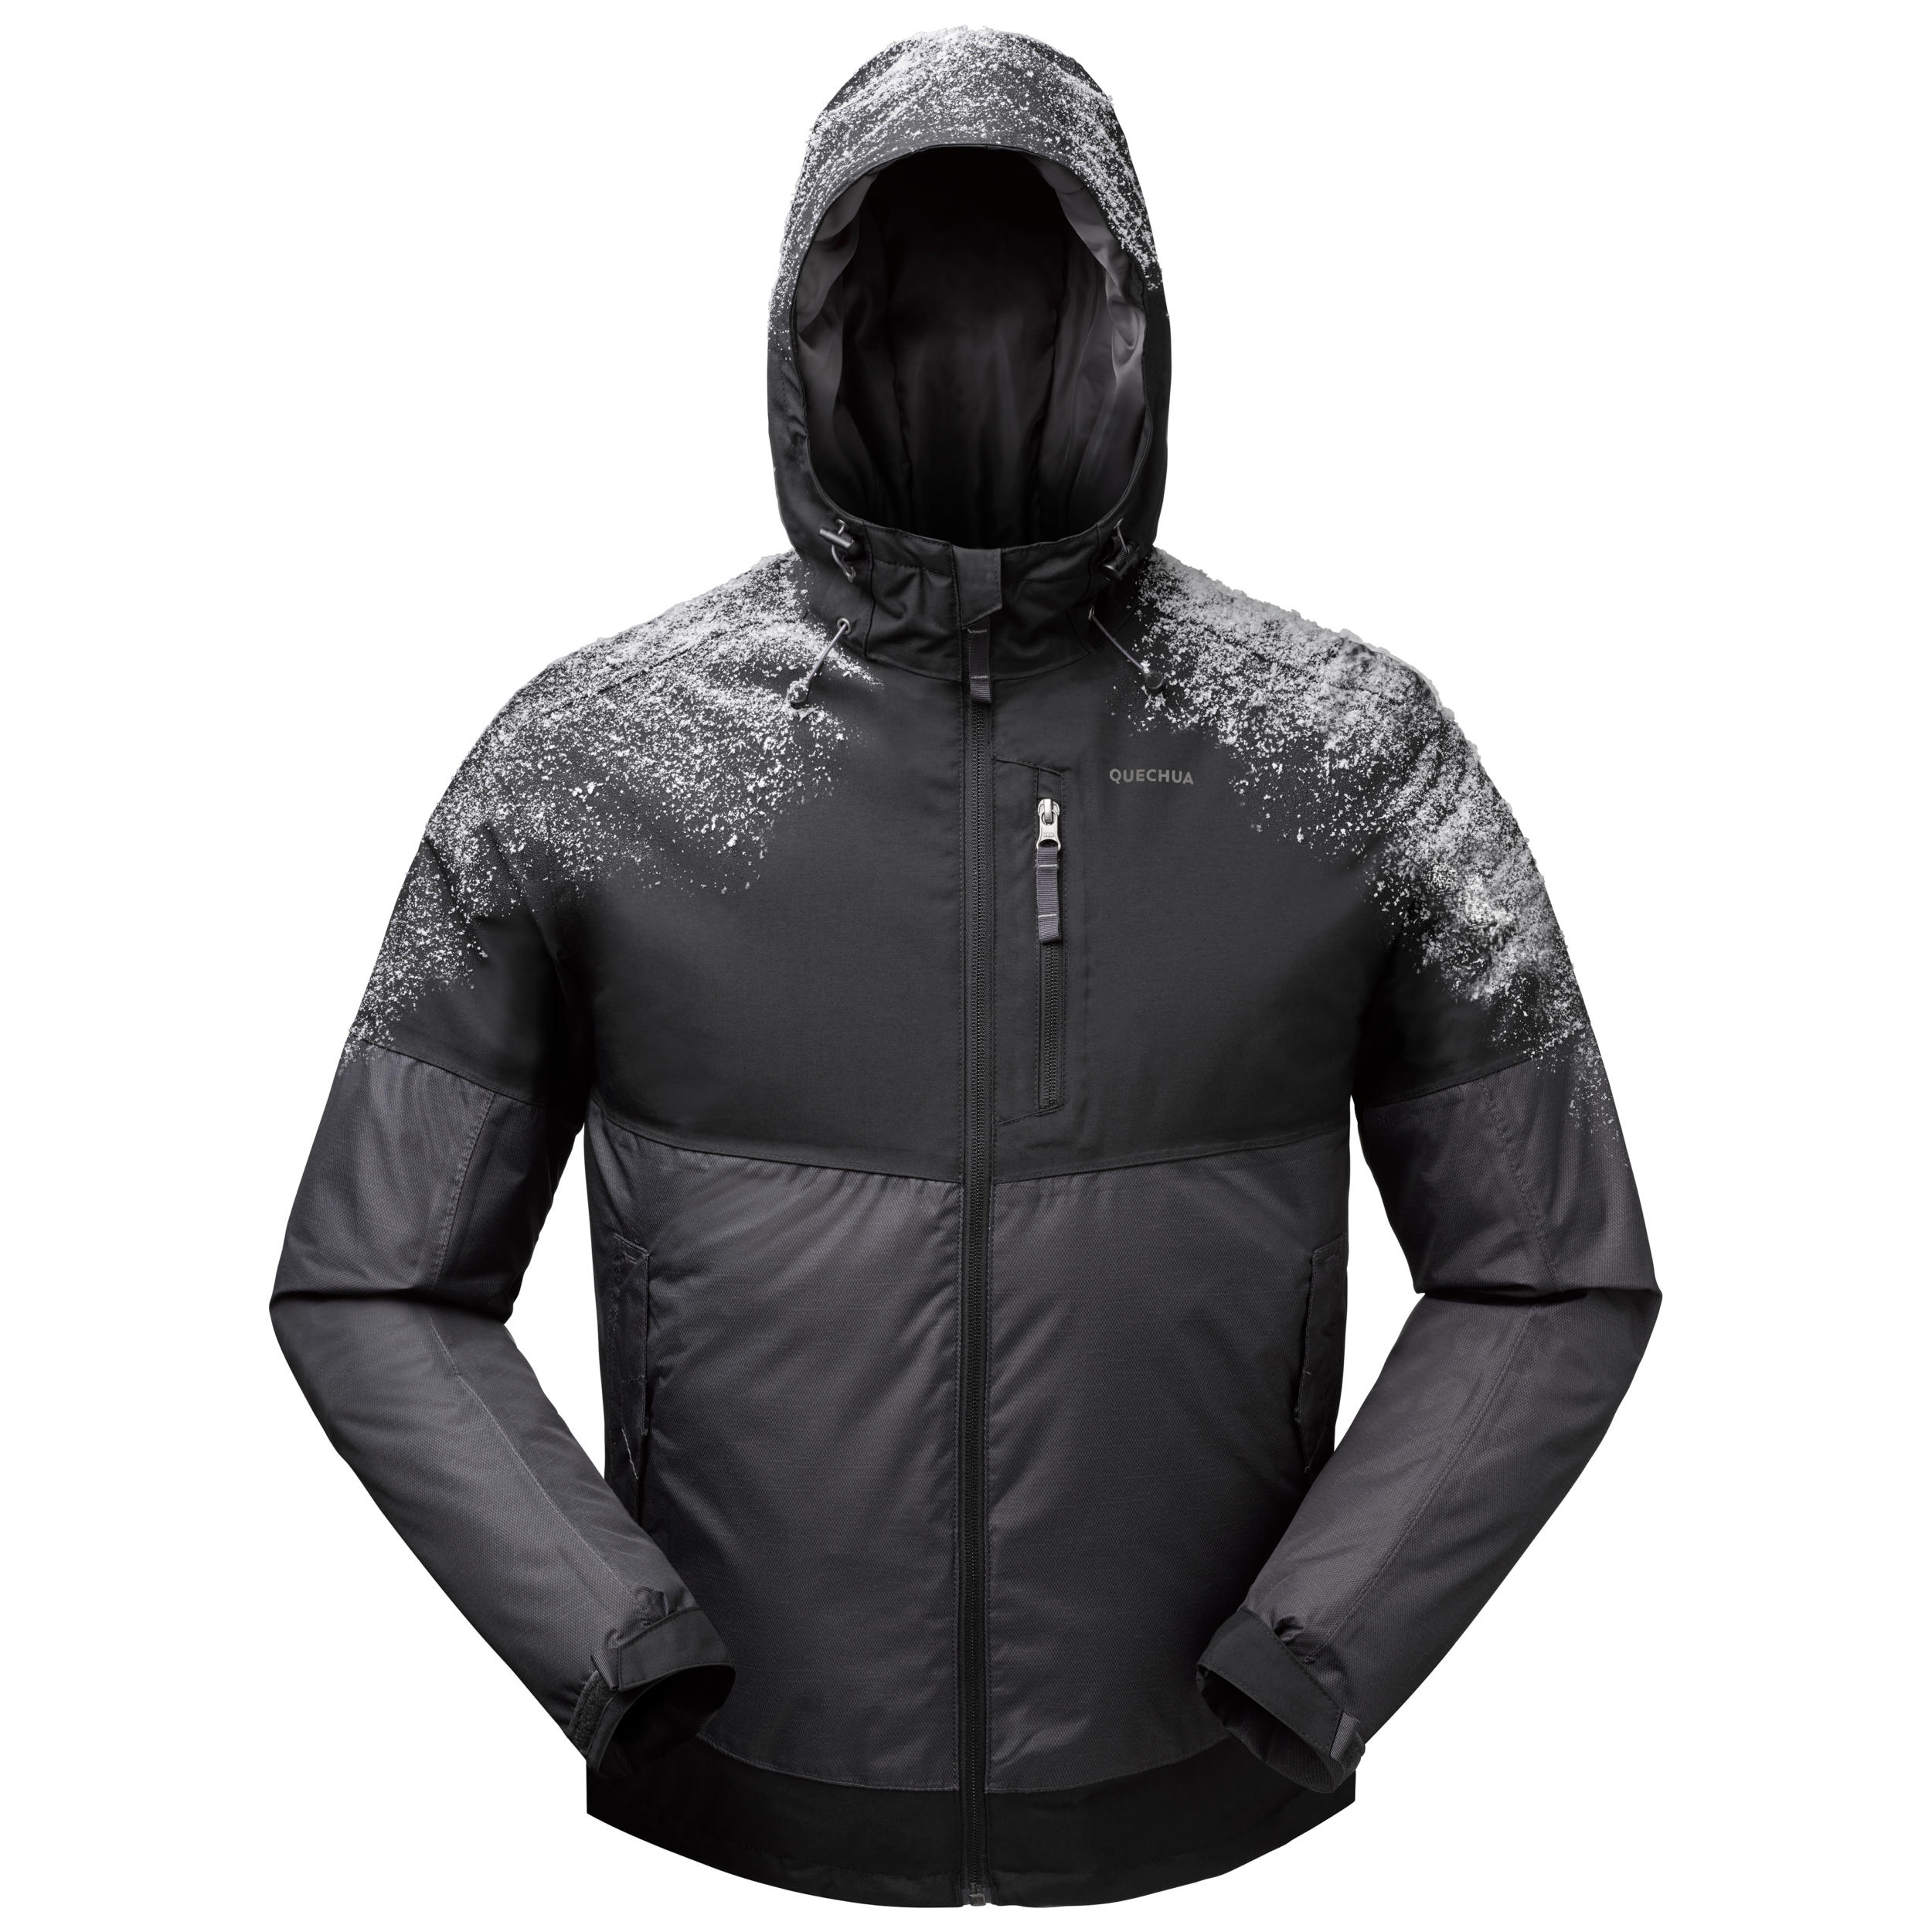 Stylish and Weatherproof Black Winter Jacket from Decathlon